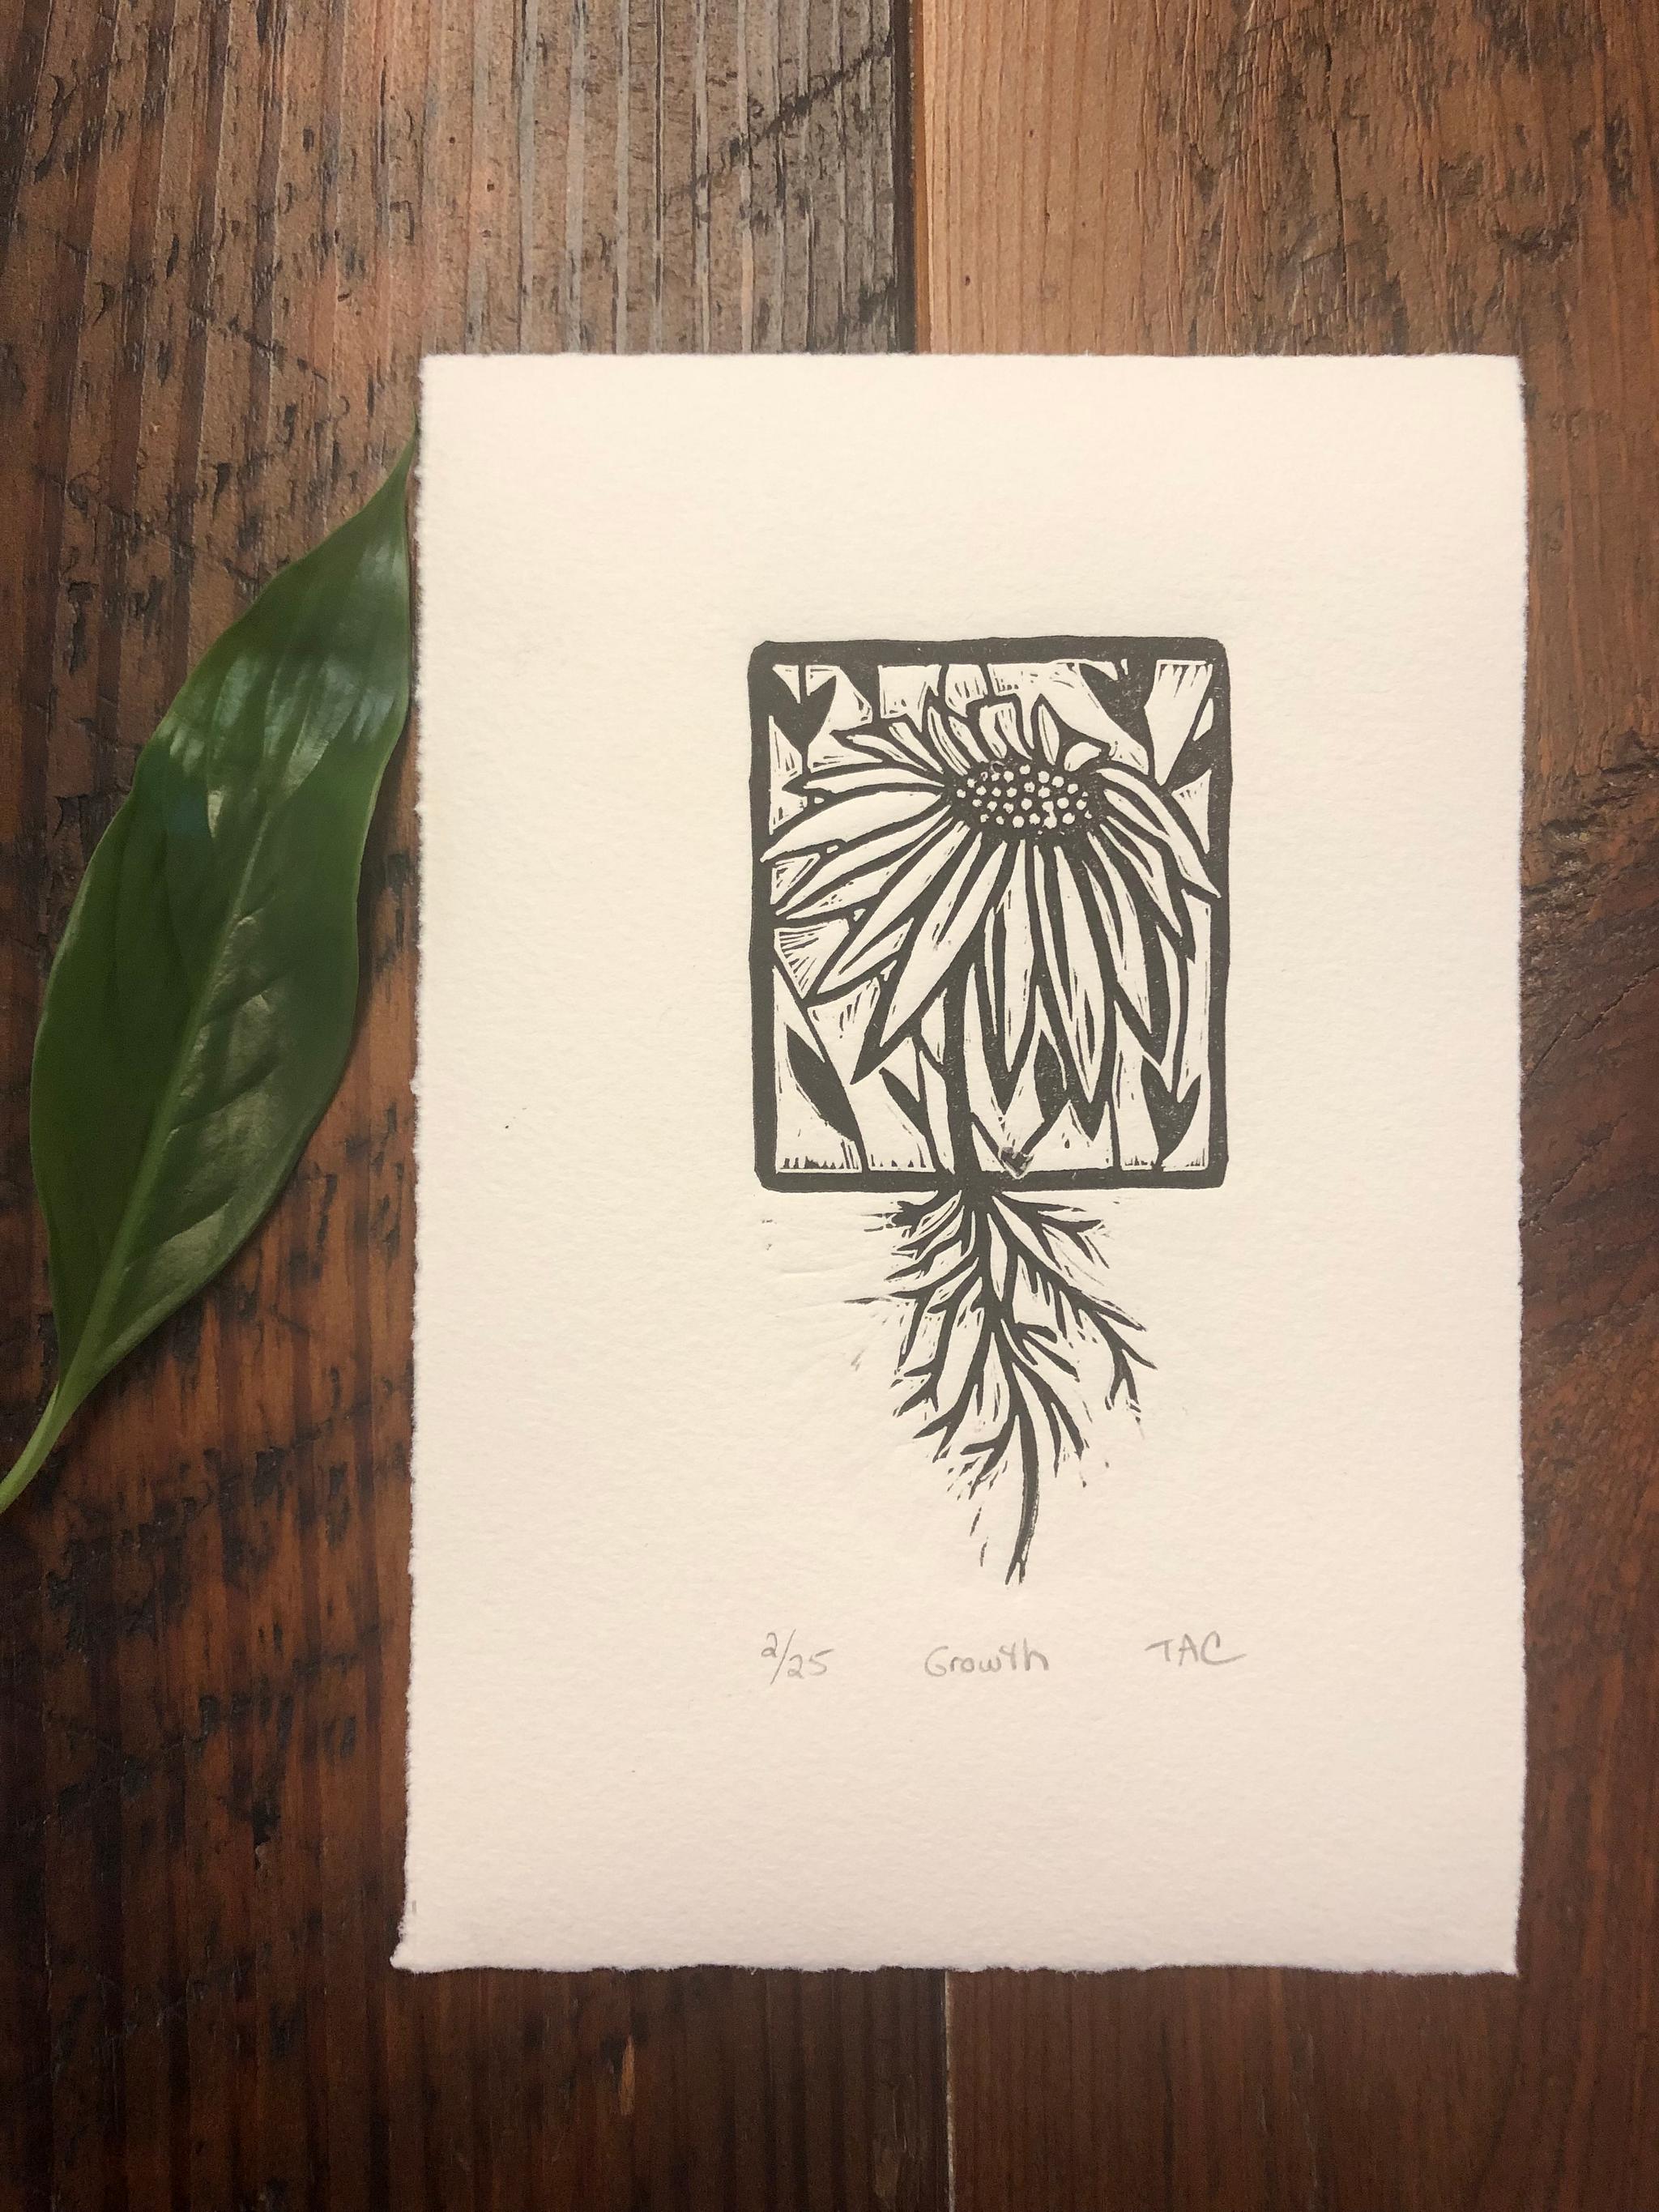 Growth Linoleum Print